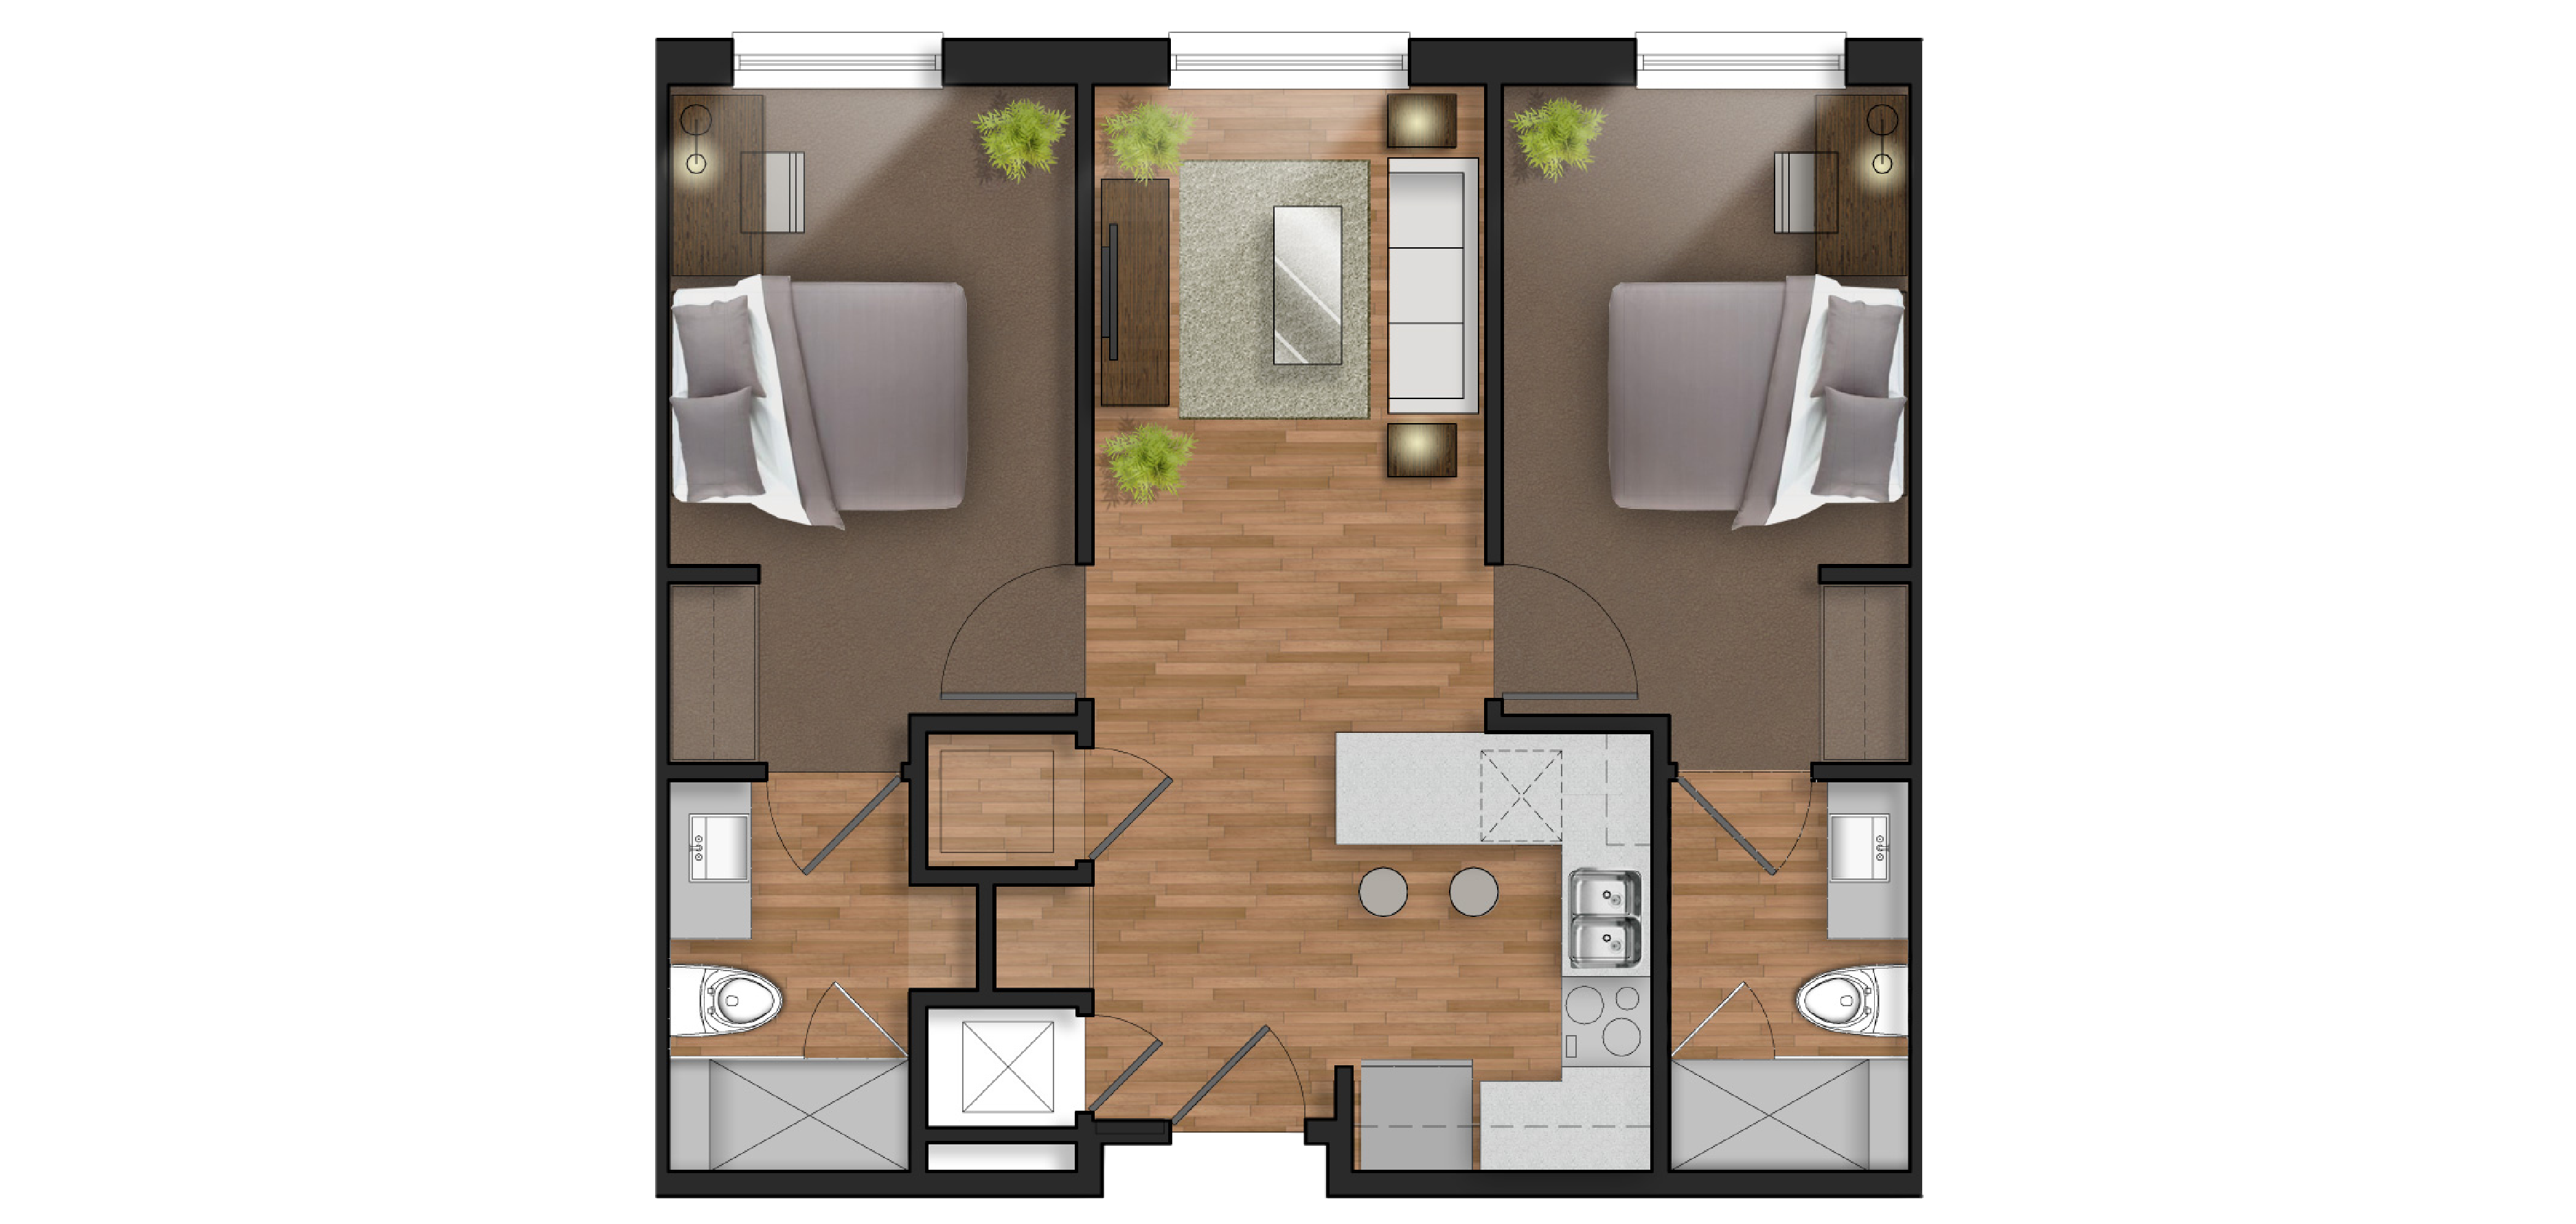 2 bedroom student apartment